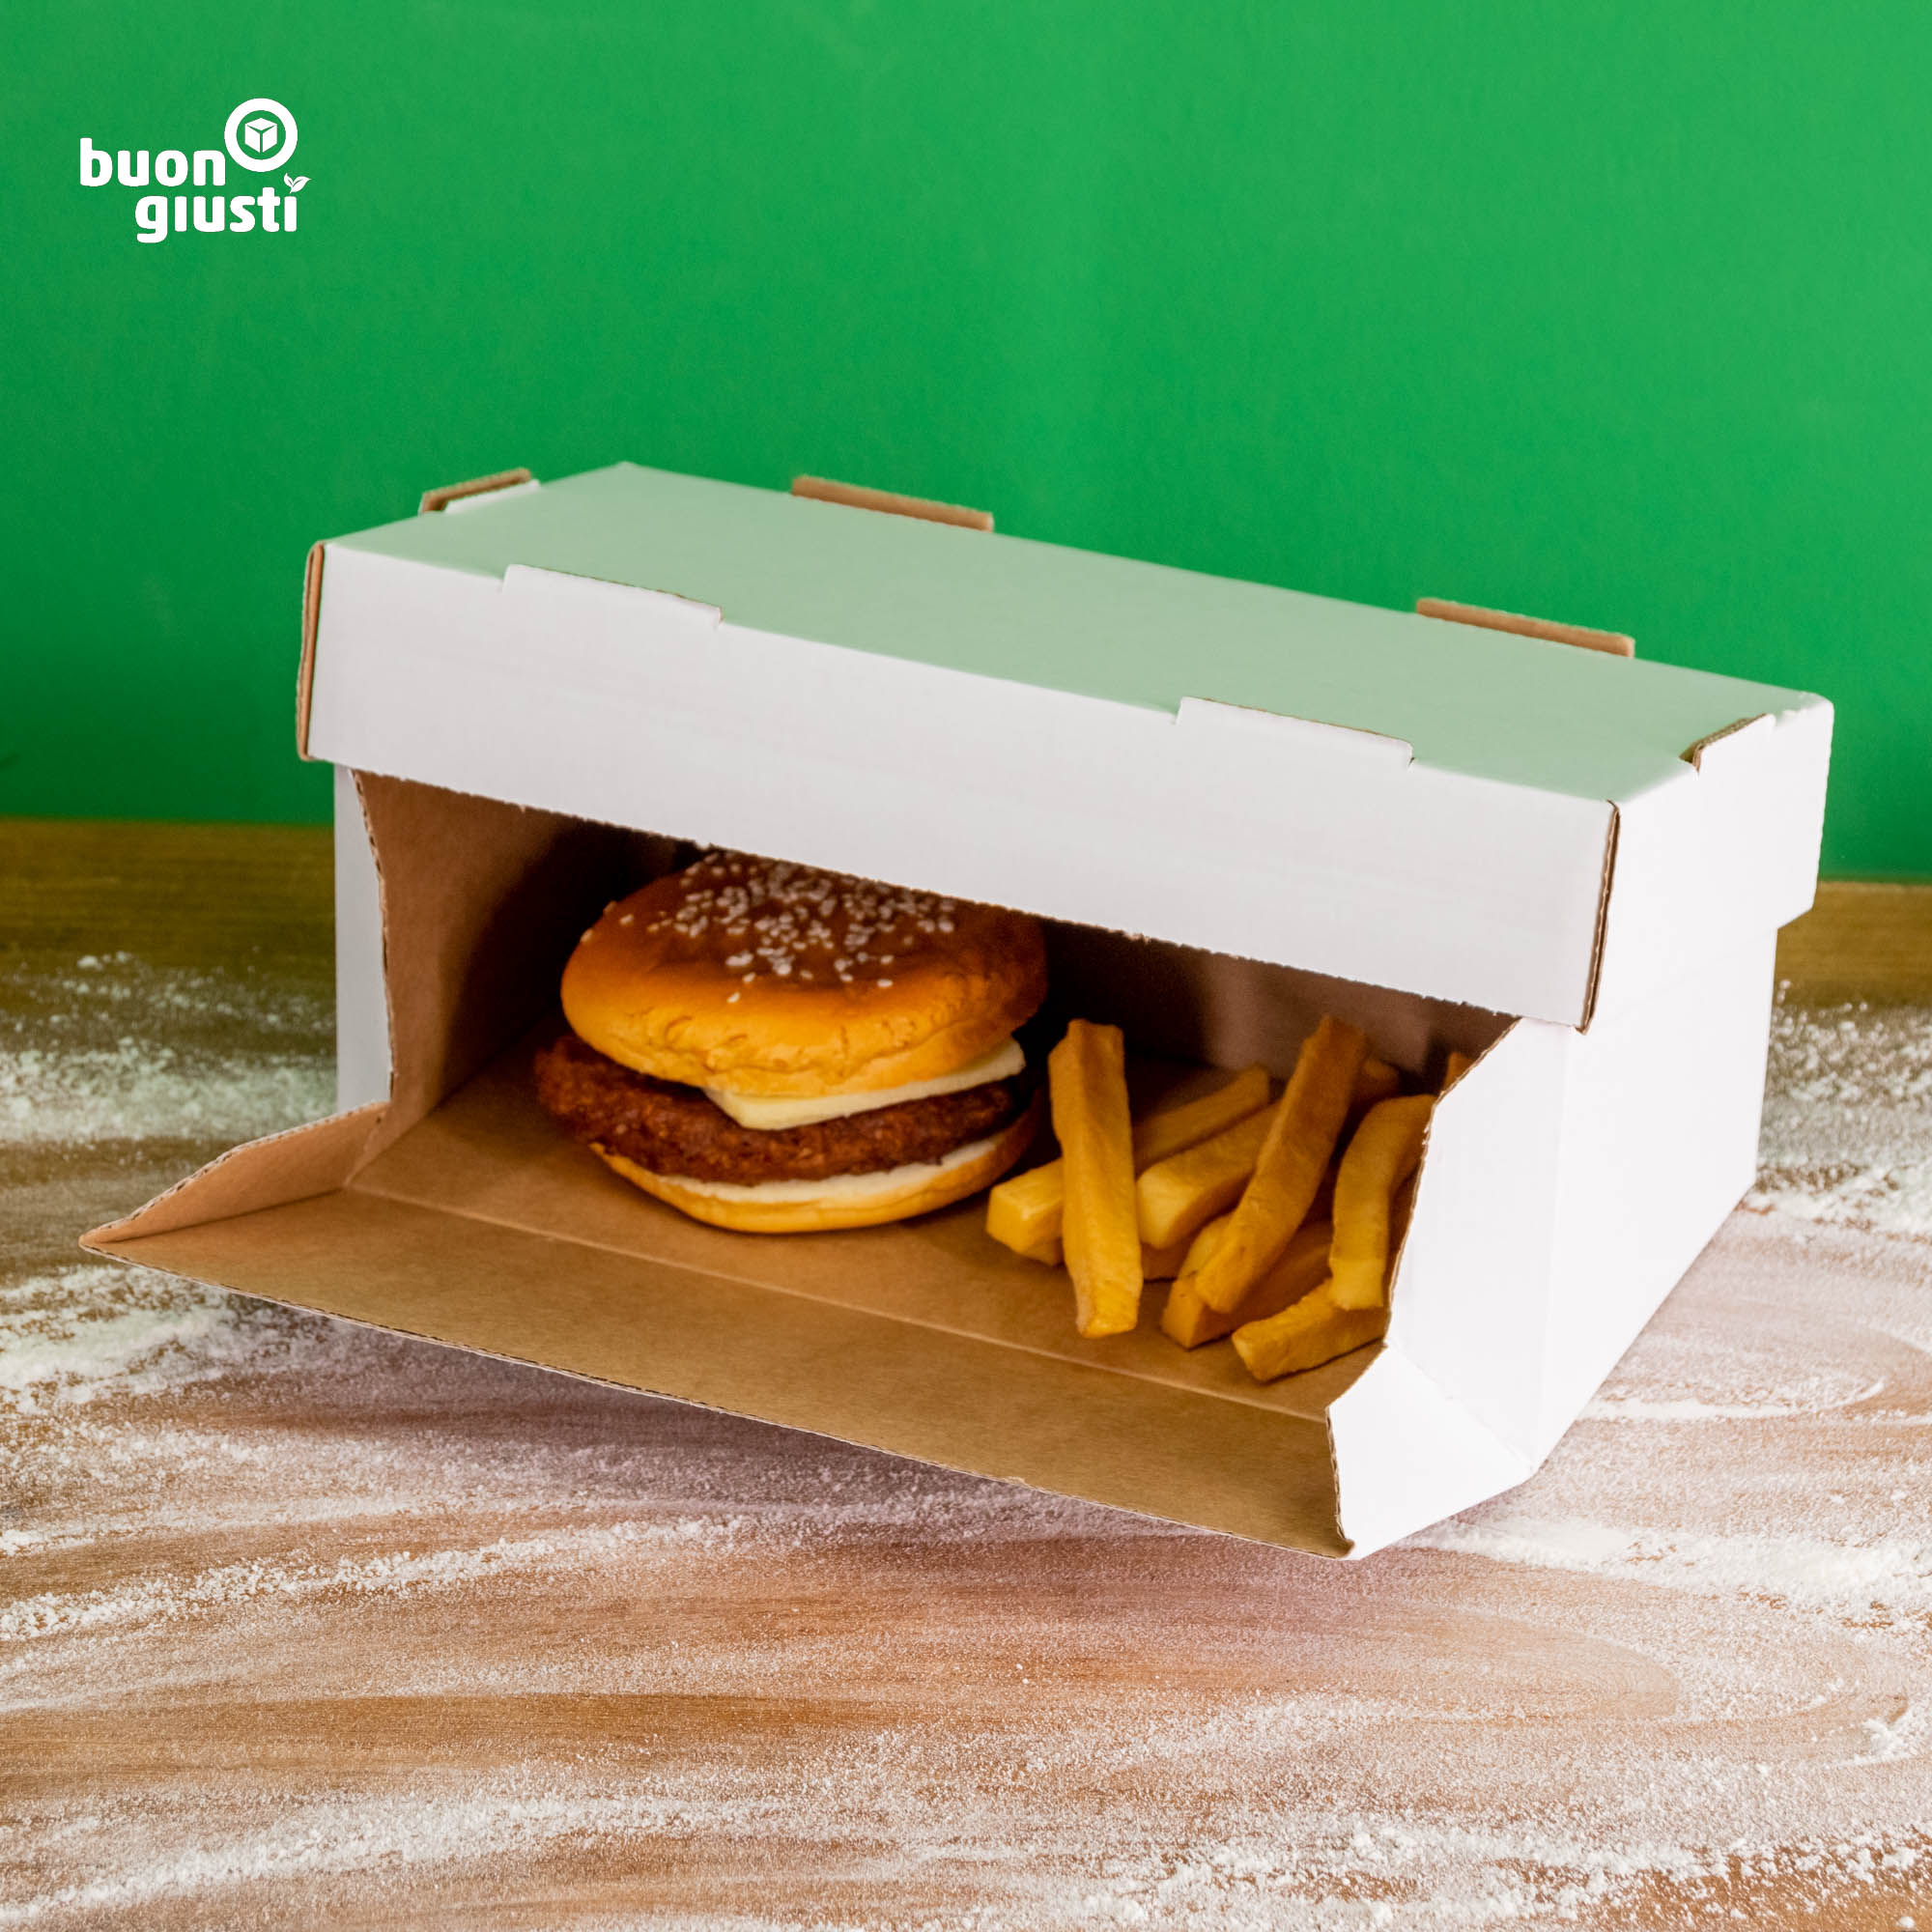 200x organic burger box corrugated cardboard 24x12x10 cm for 2 burgers brown